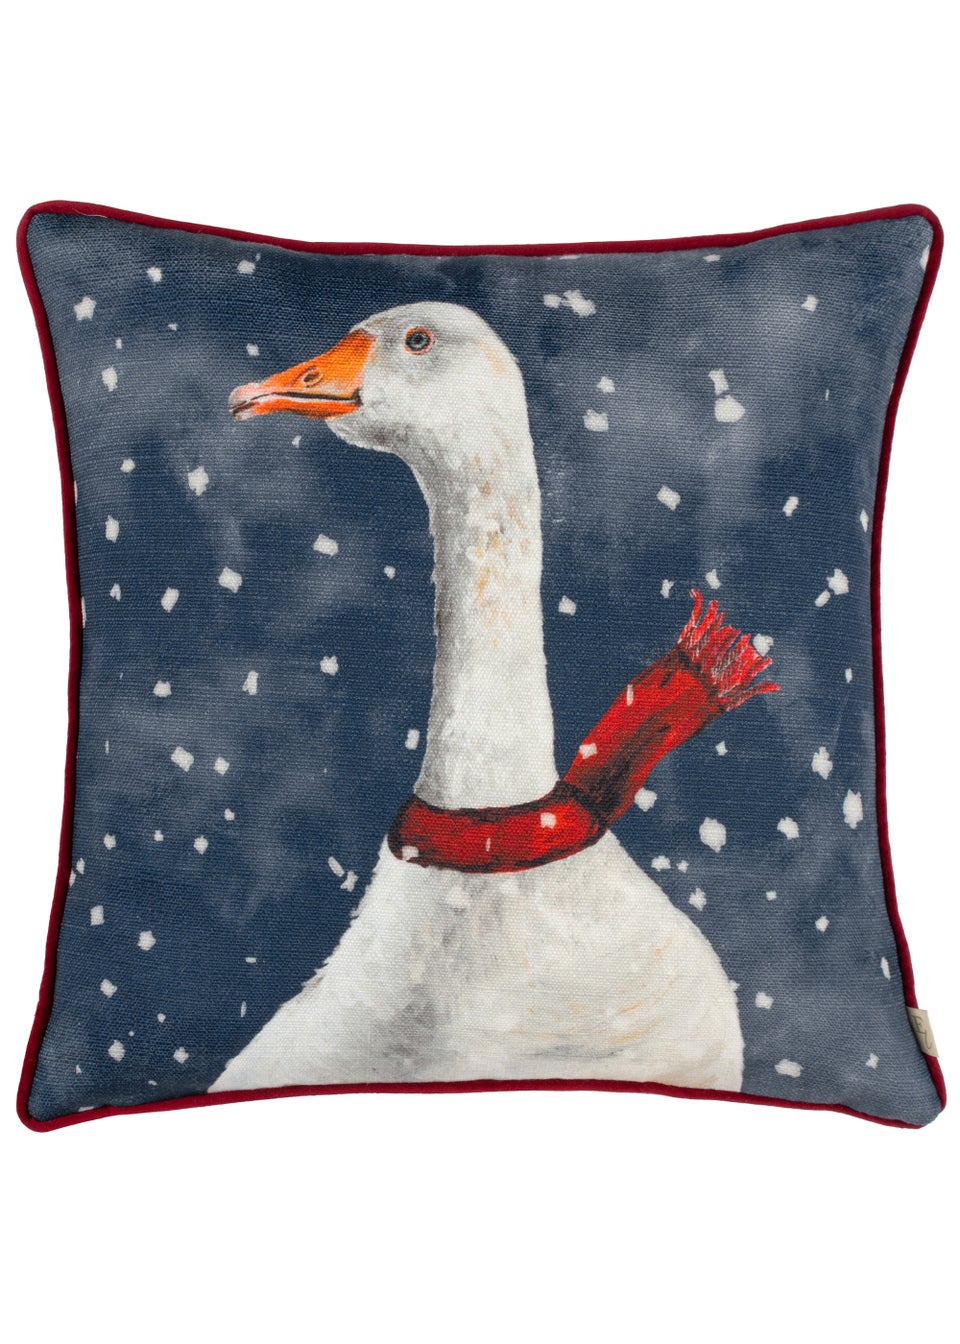 Evans Lichfield Christmas Goose Festive Filled Cushion (43cm x 43cm x 8cm)